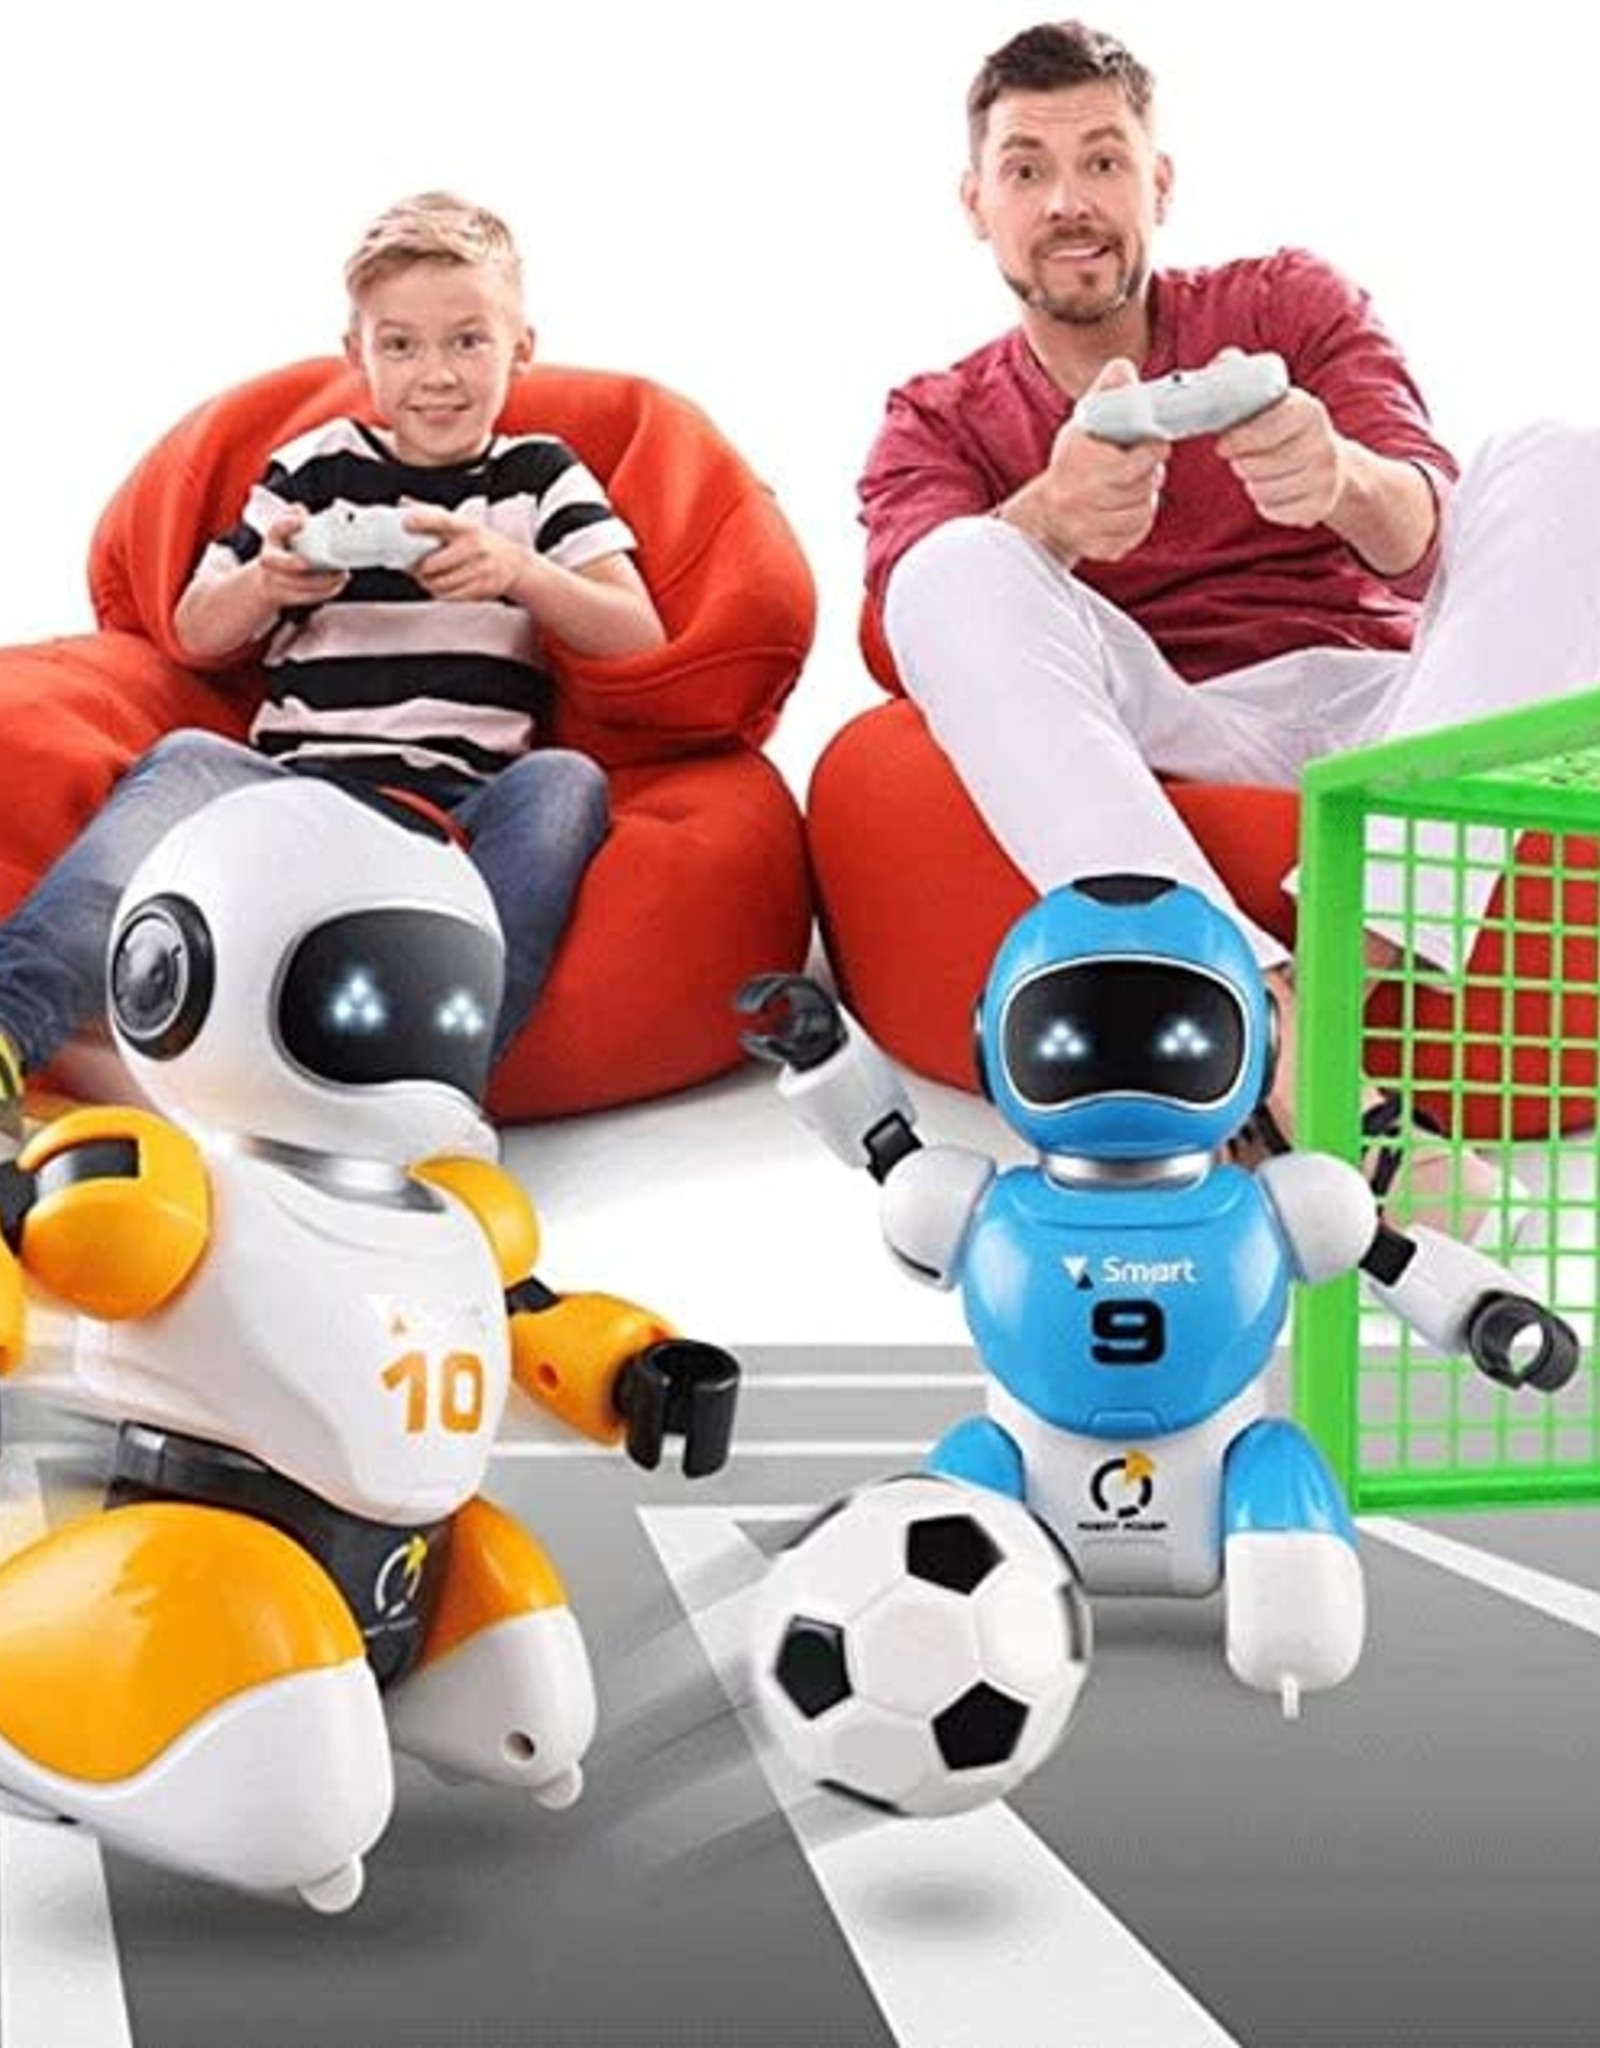 Soccerbot - Remote Control Soccer Robot